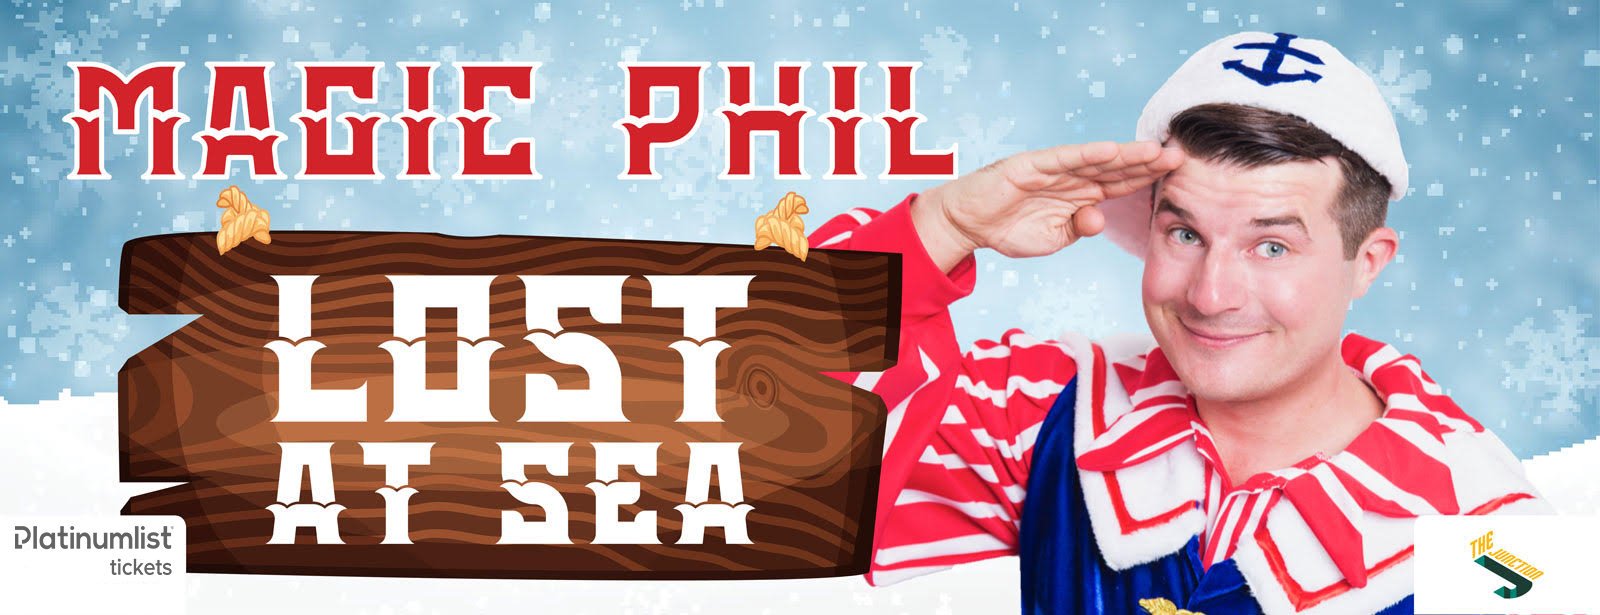 Magic Phil lost at Sea - Coming Soon in UAE